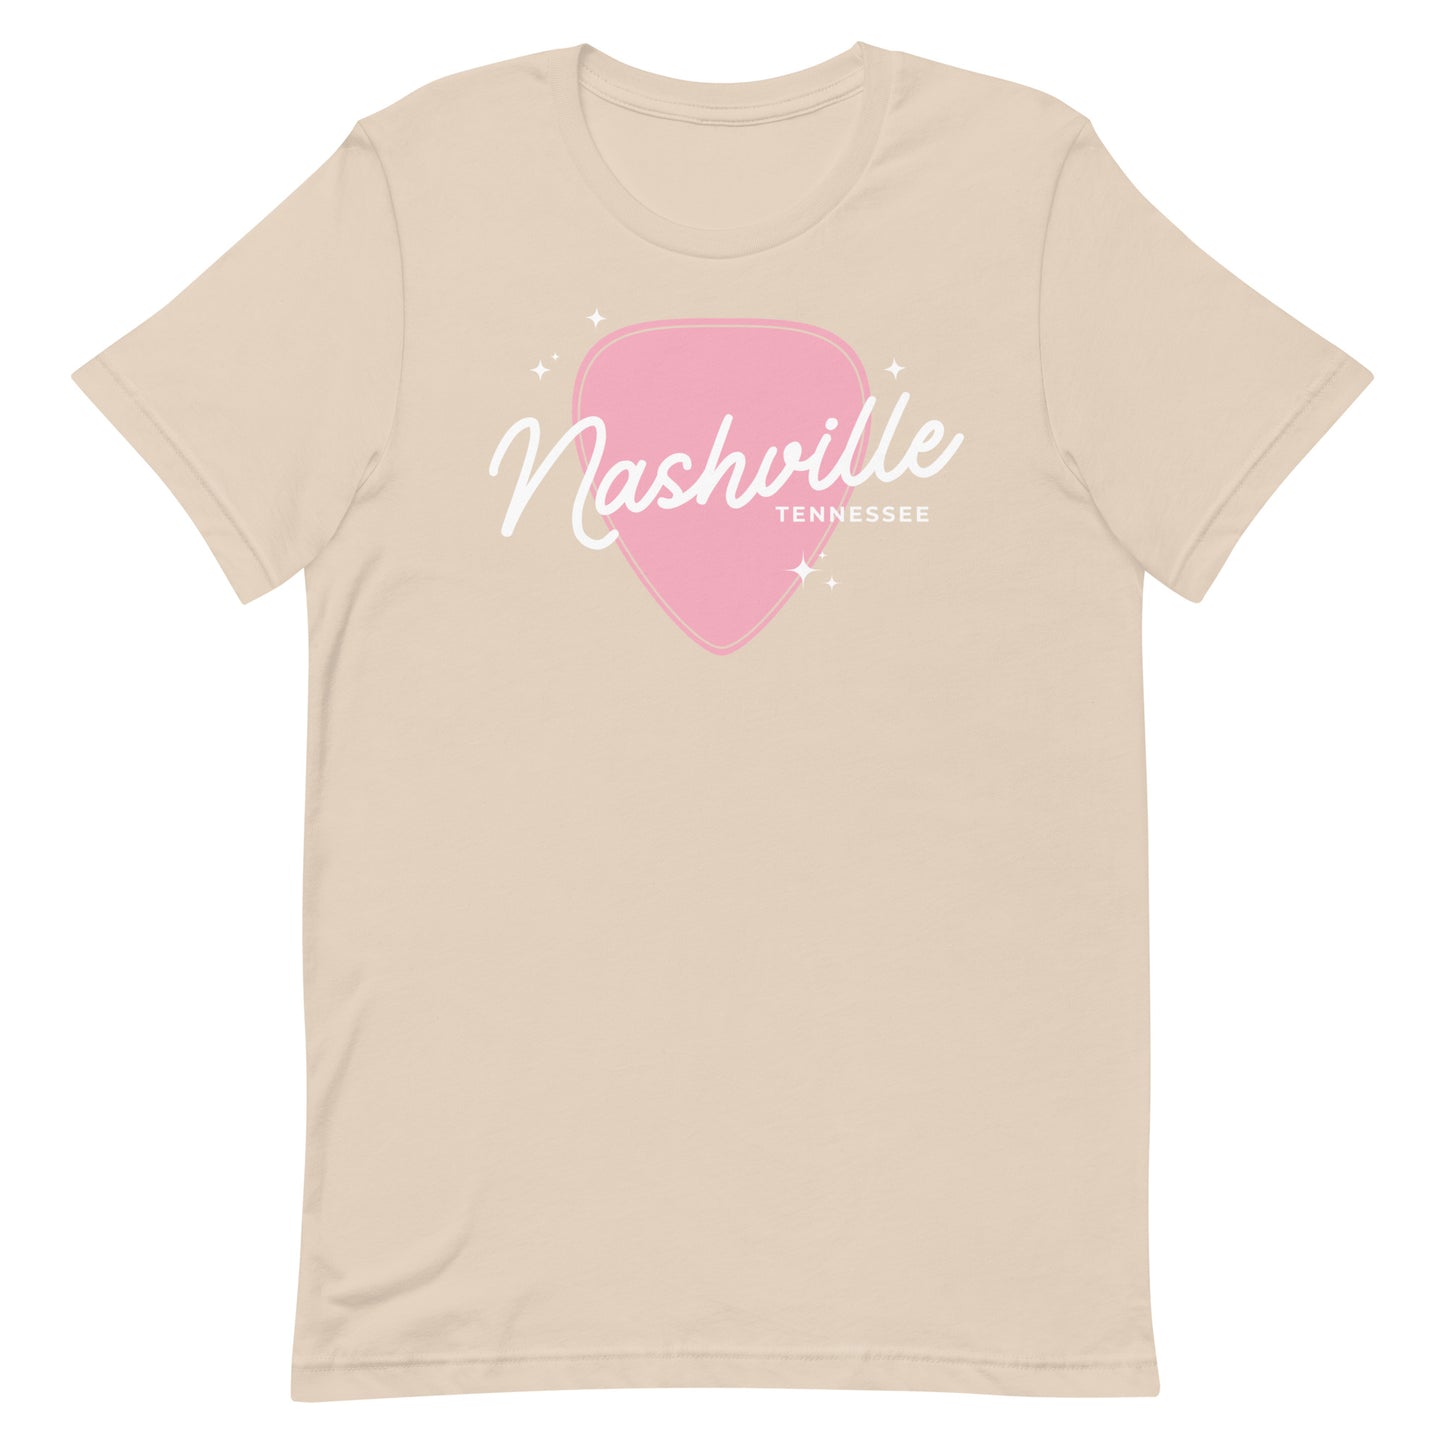 Nashville t-shirt for girls trip or bachelorette party